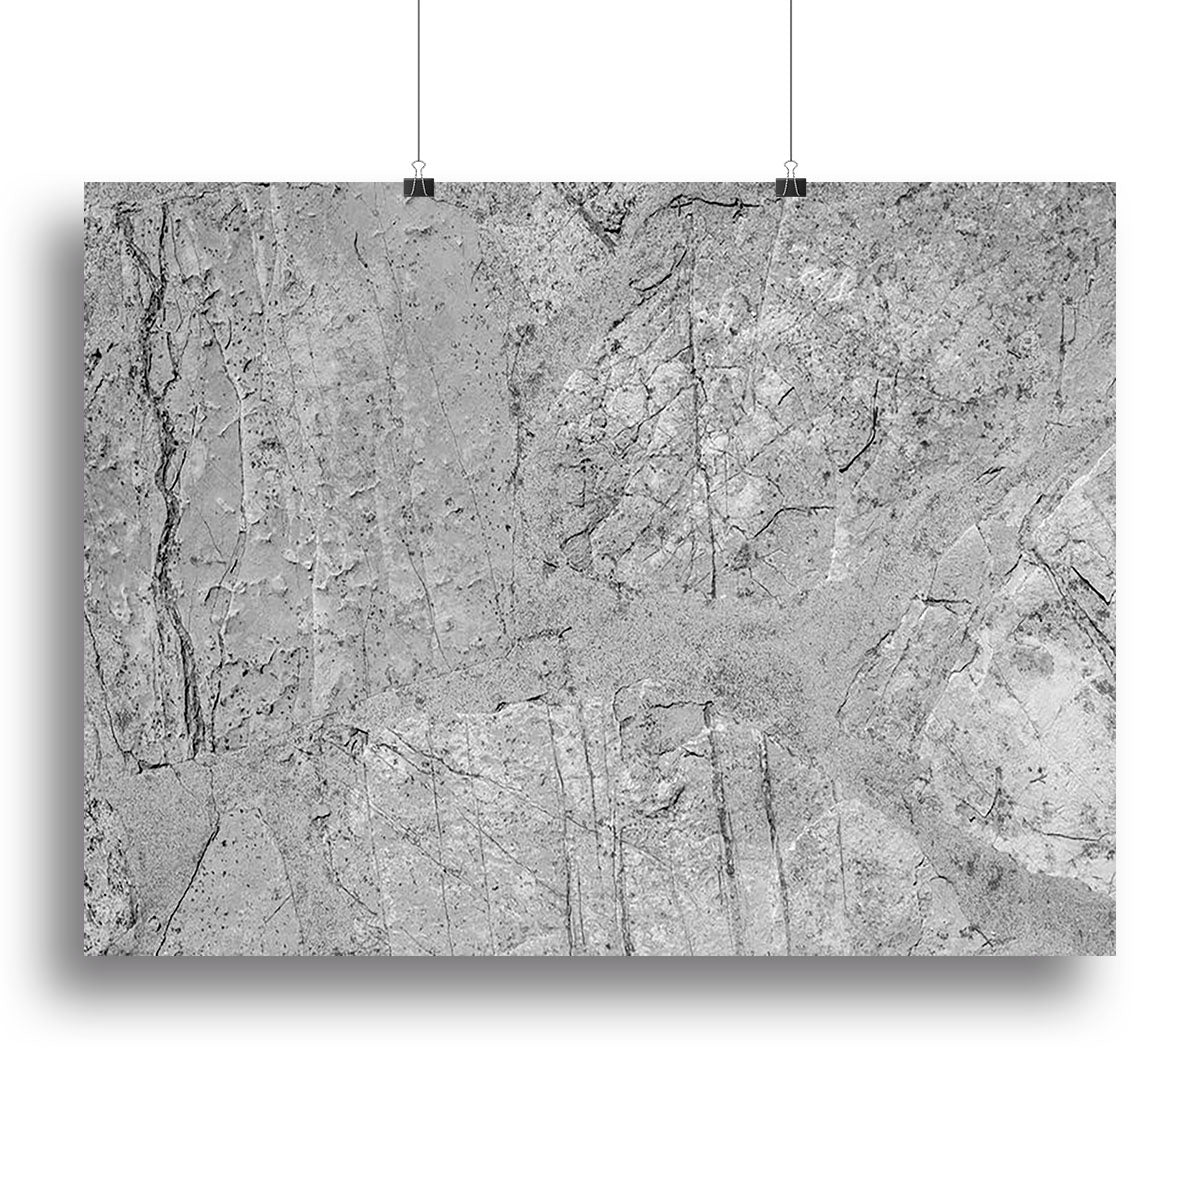 Stone concrete floor Canvas Print or Poster - Canvas Art Rocks - 2